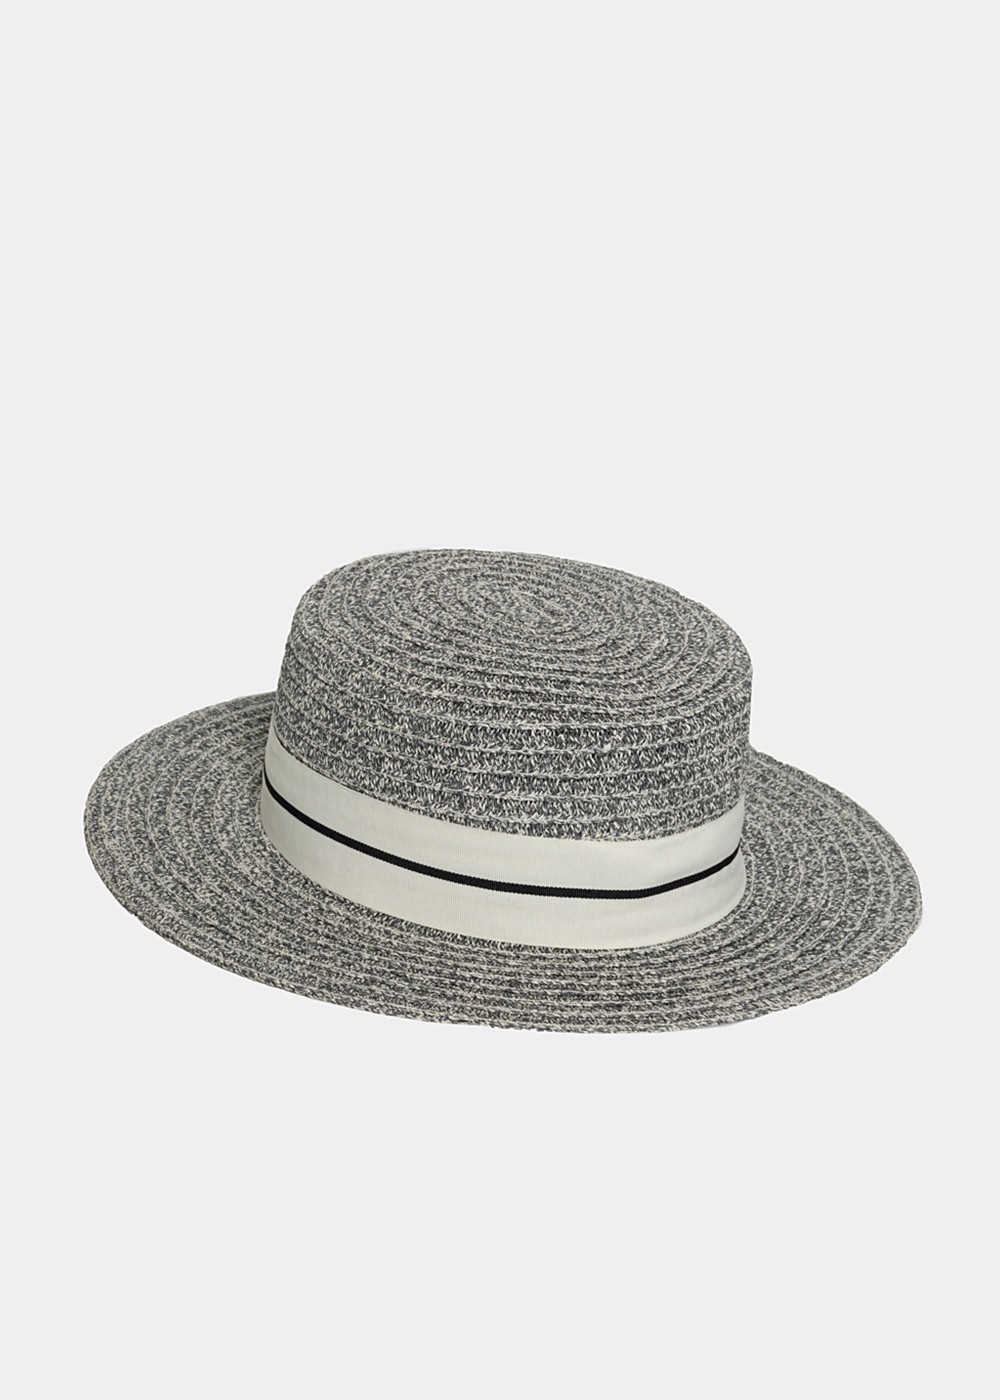 Grey Straw Hat with White Strap